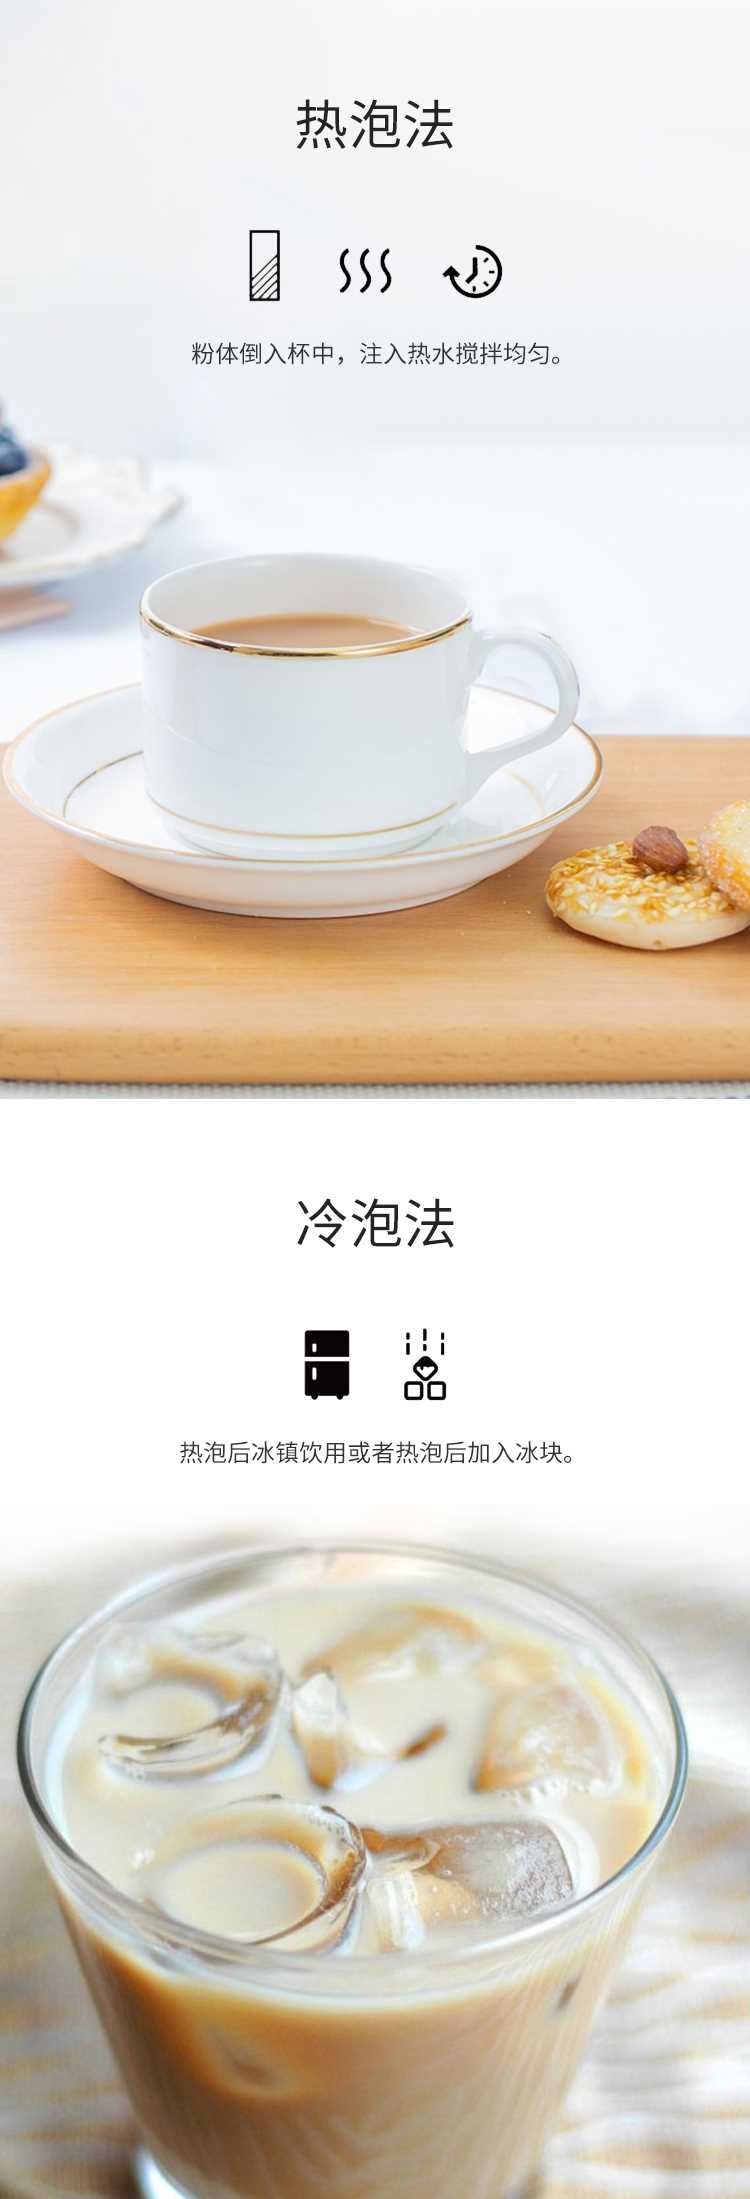 AGF-CAFE-LATORY棒状浓郁皇家奶茶6枚18枚入_03.jpg